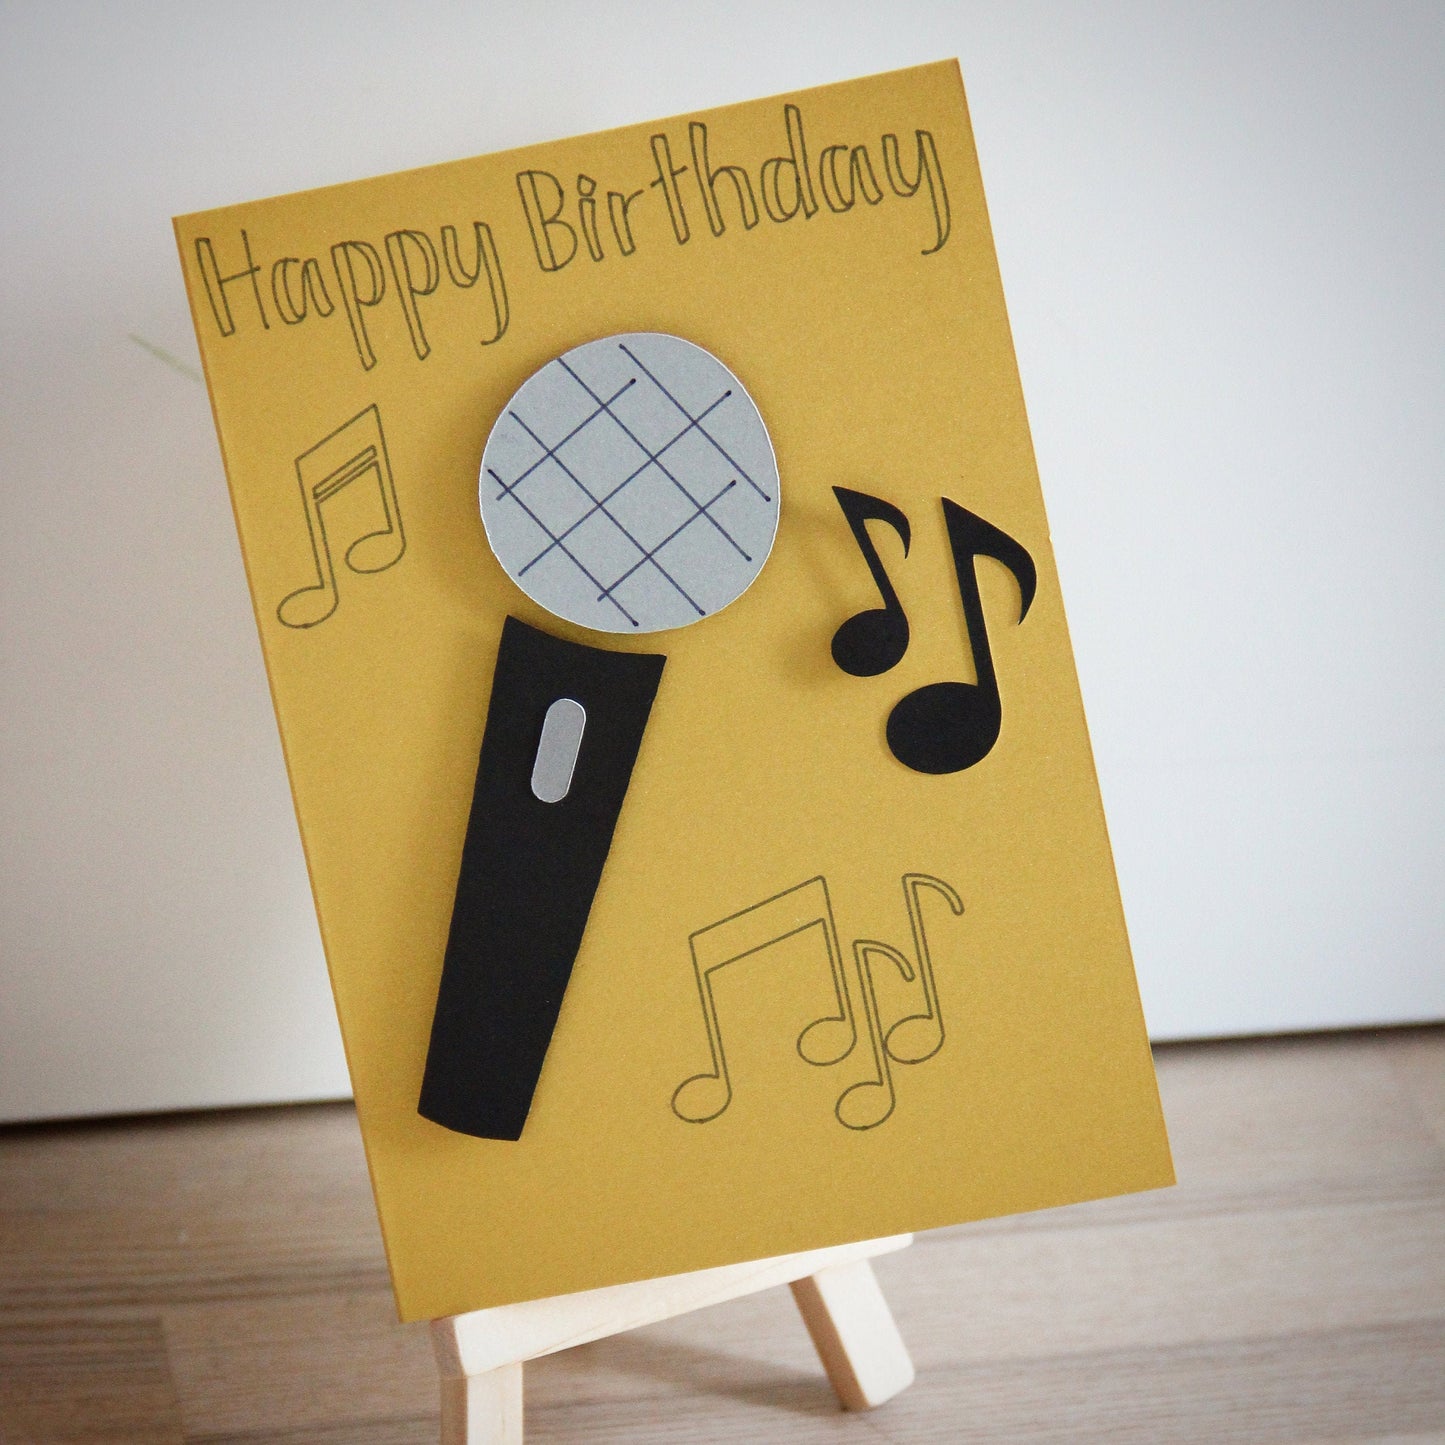 Singer birthday card